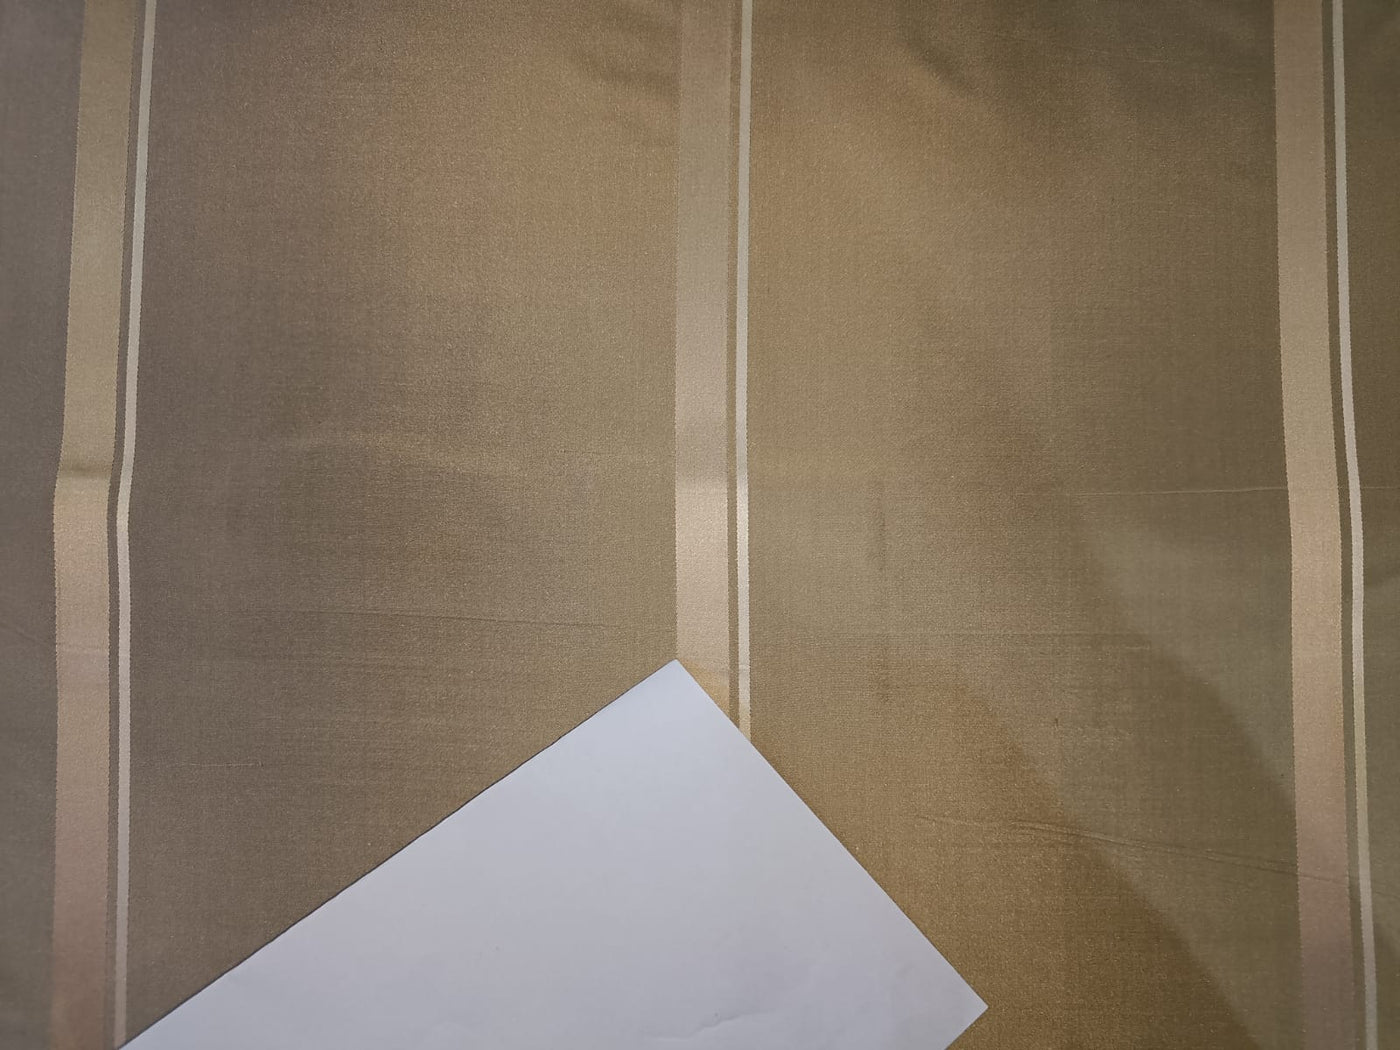 100% Silk Taffeta Fabric Shades of Beige & Cream colour with Satin Stripes 54" wide TAF#S102[2]